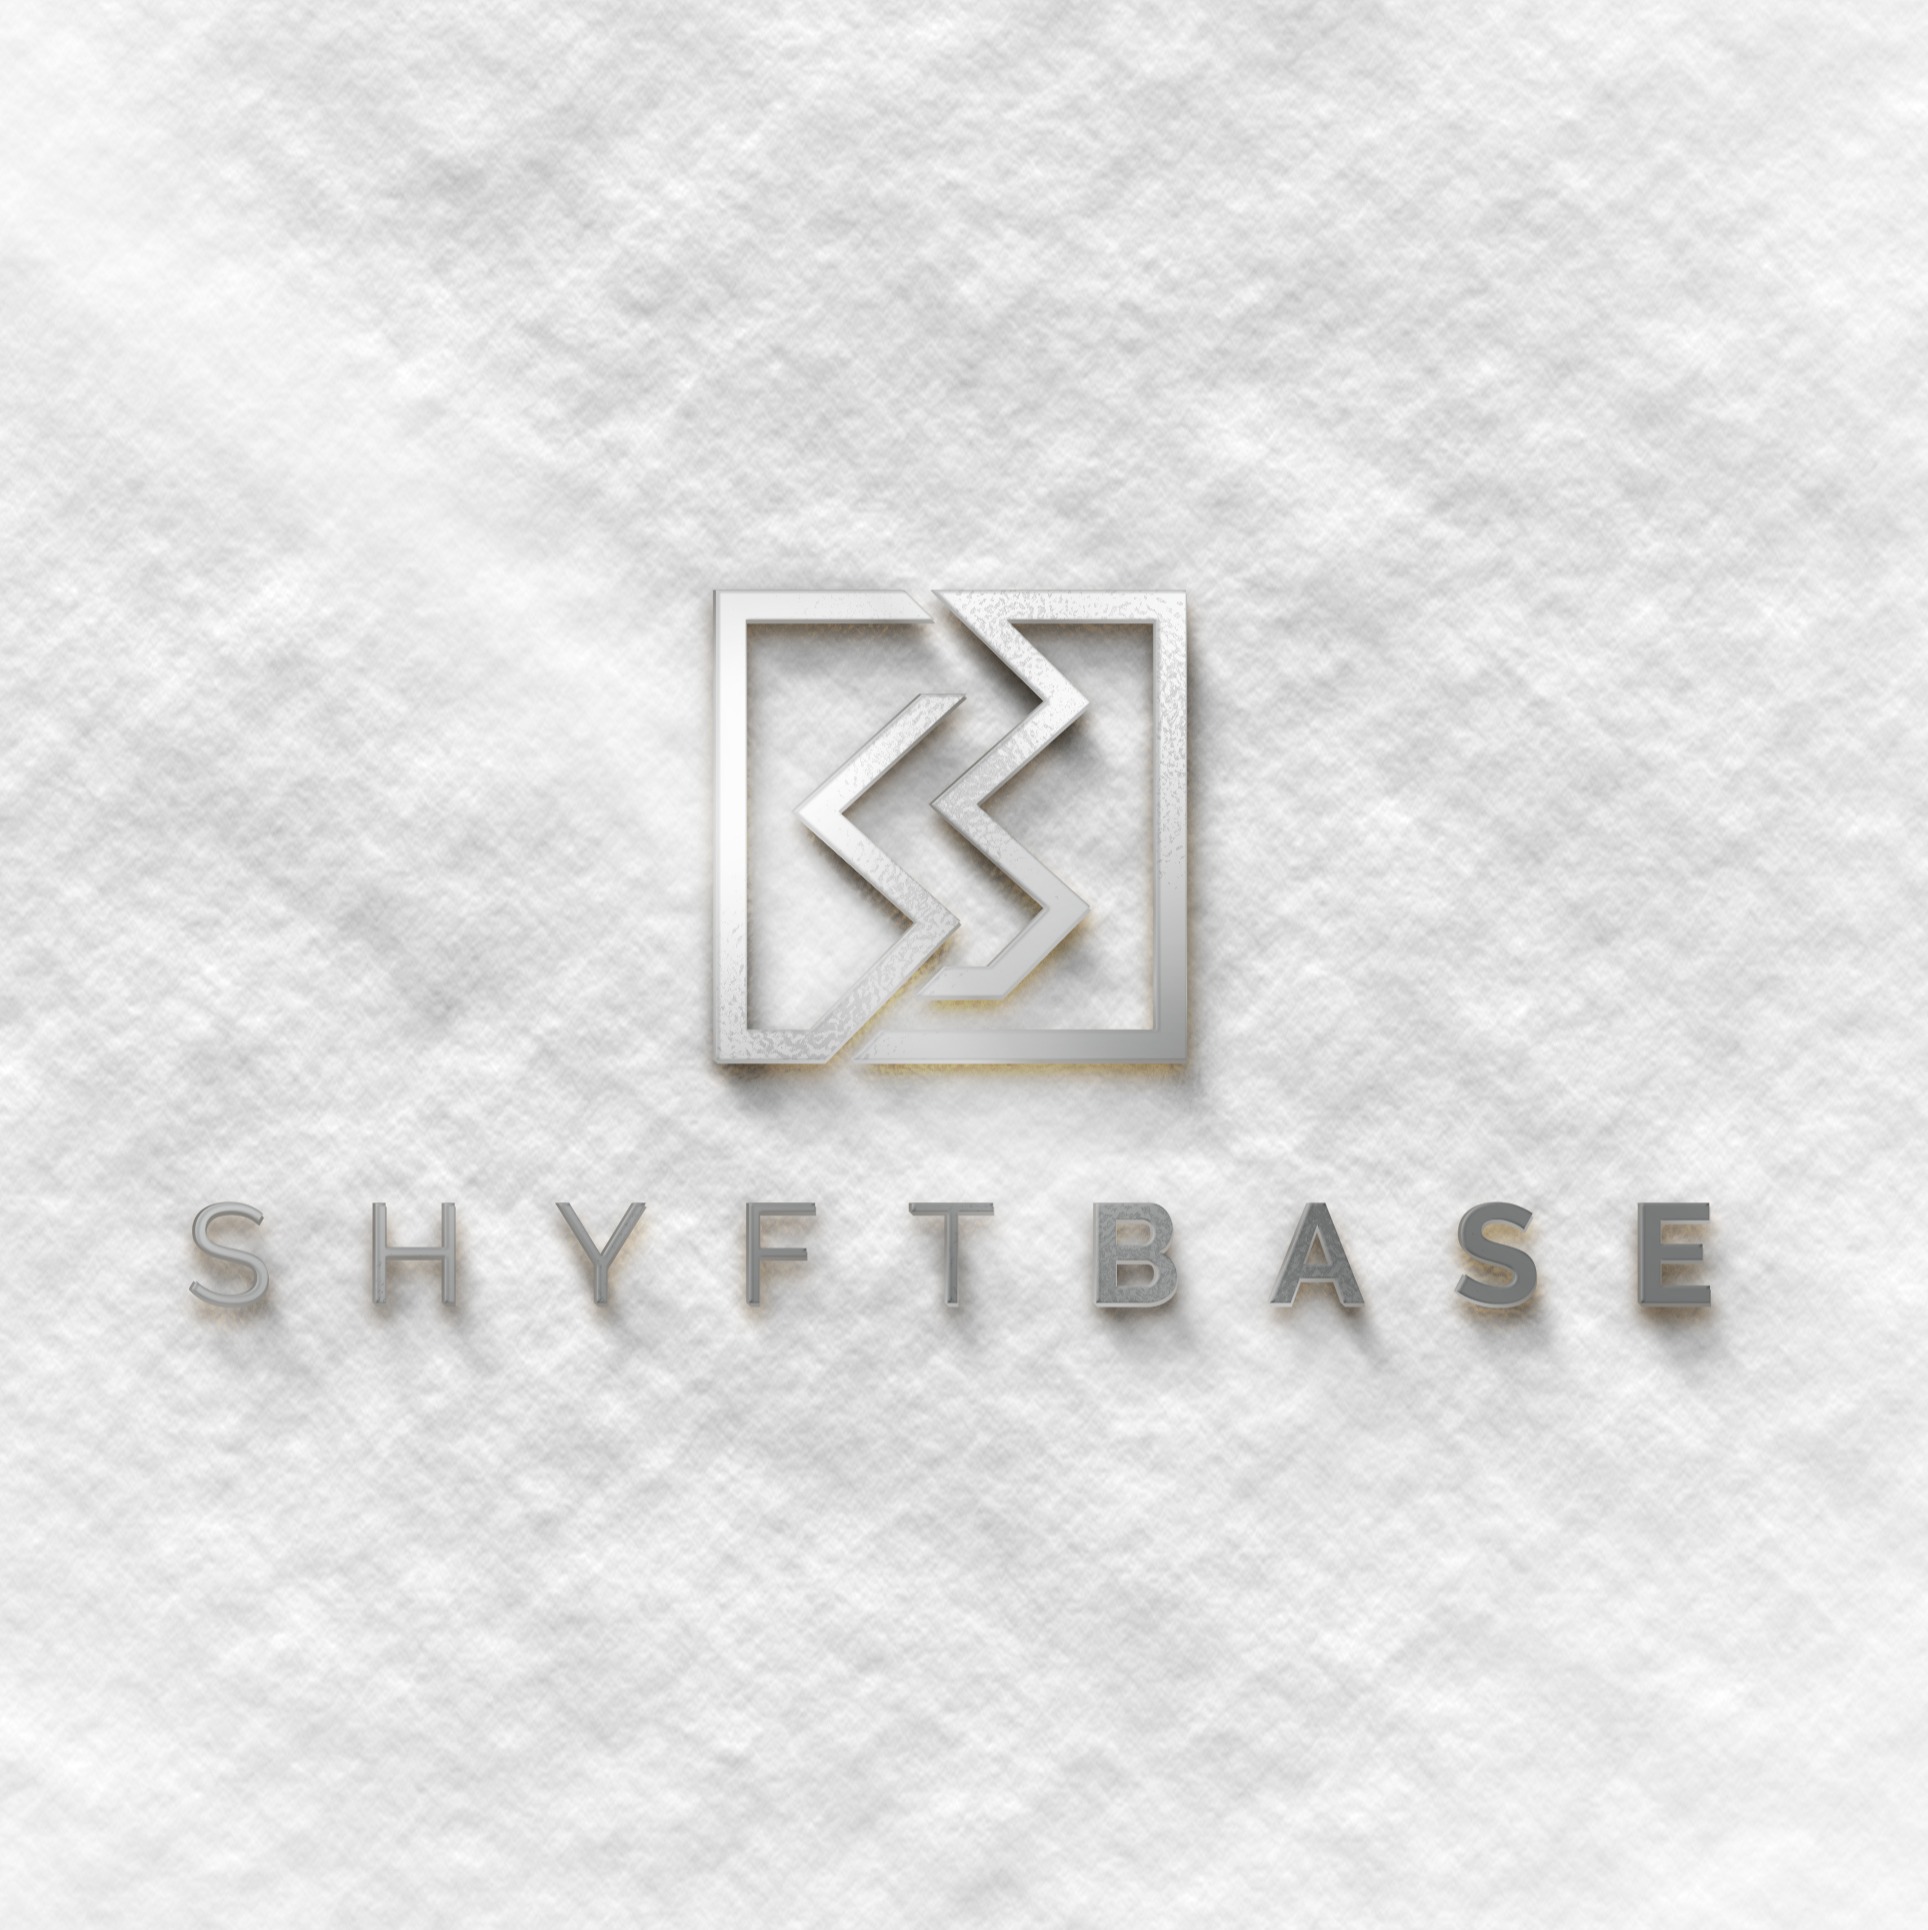 Shyftbase Inc